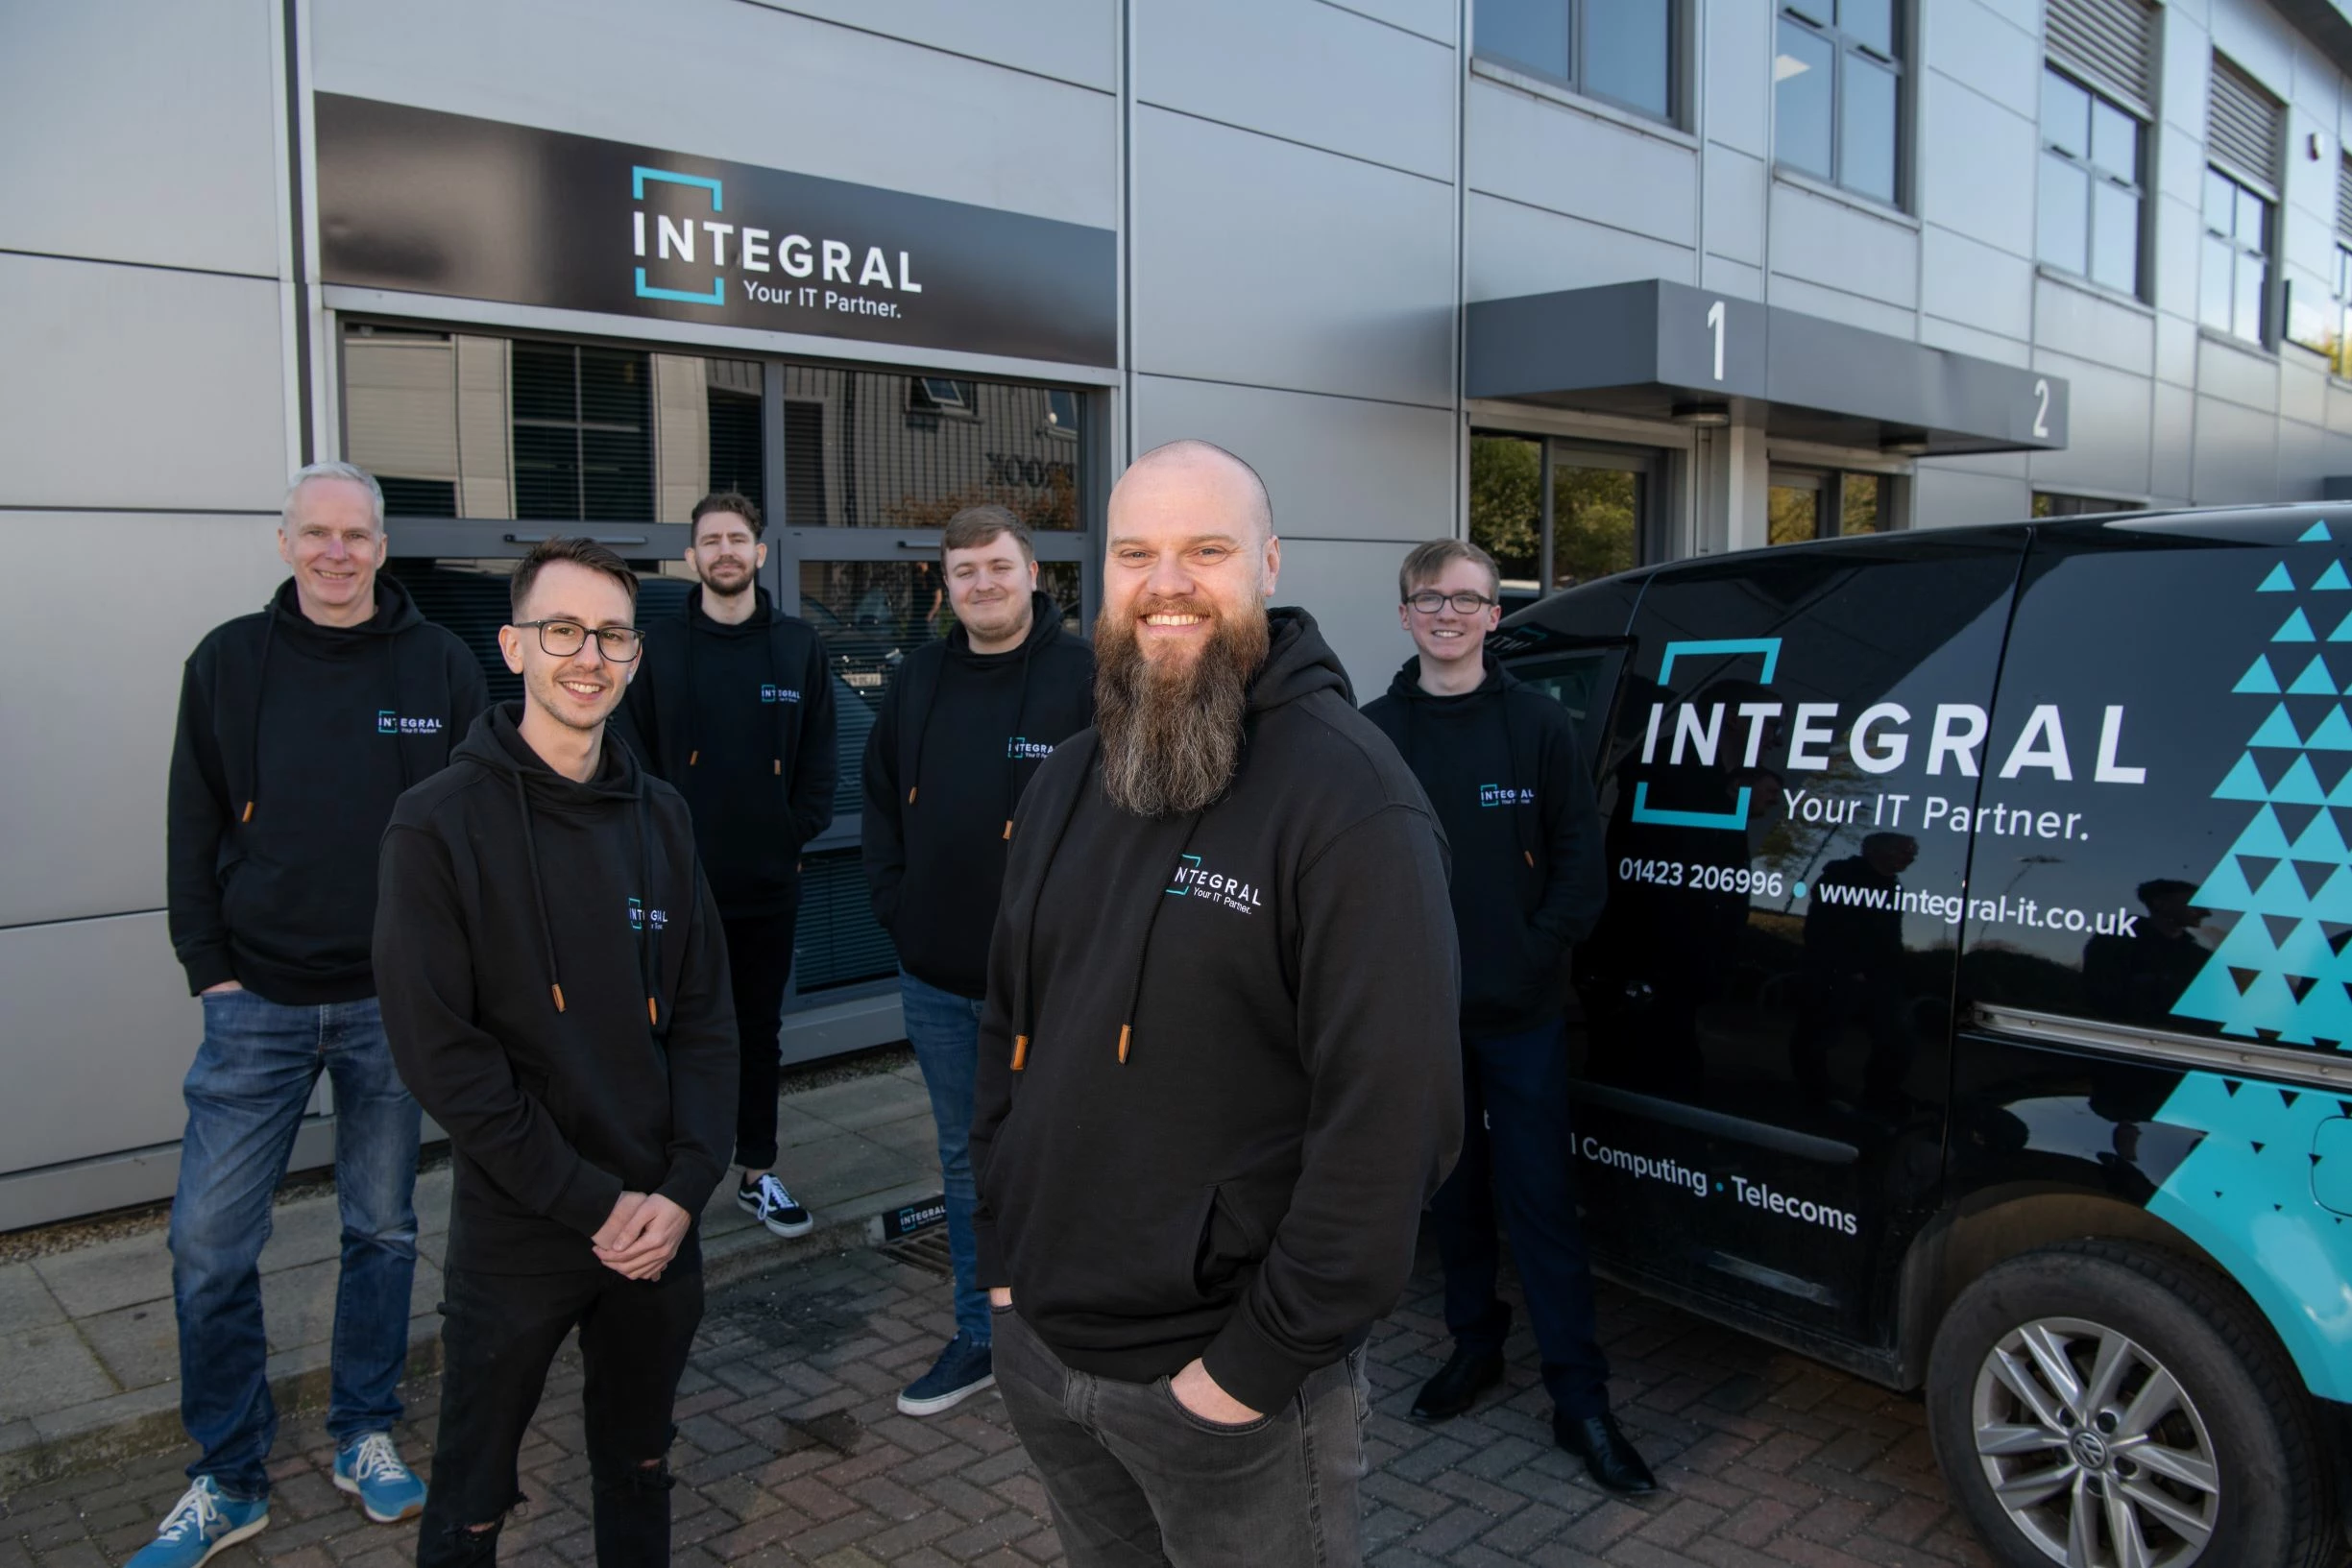 The Integral IT Team